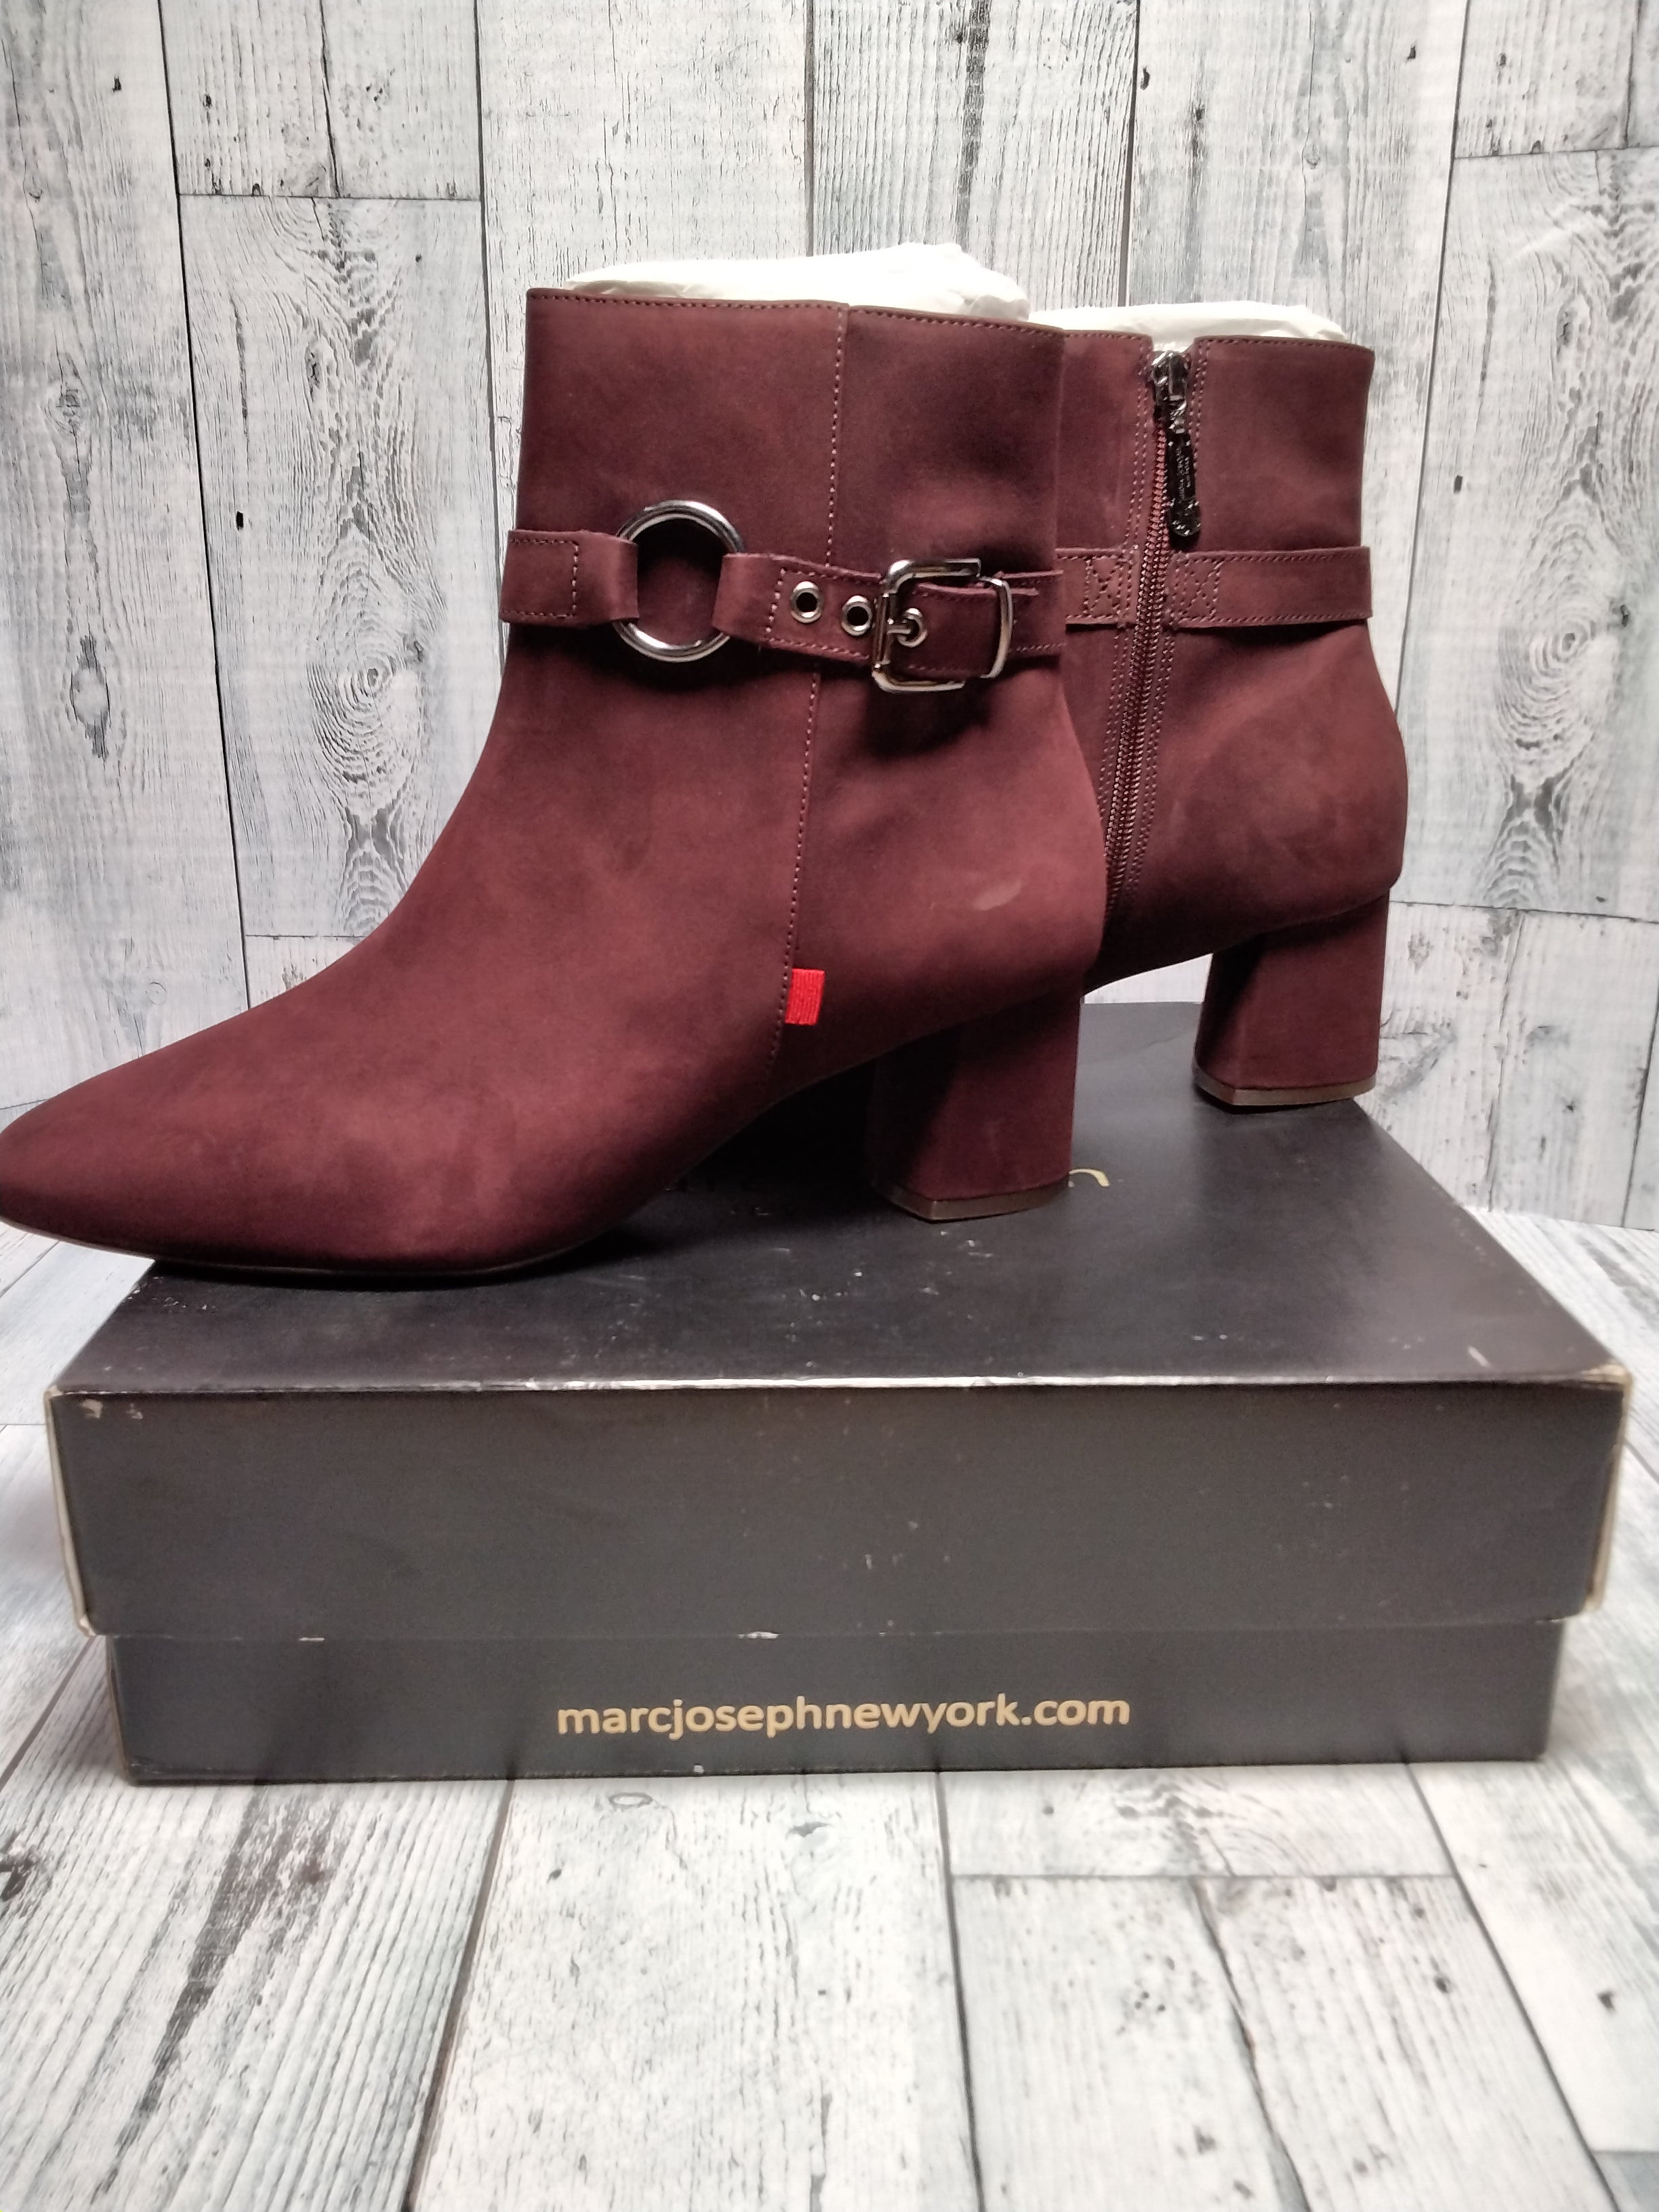 Marc Joseph New York Women's Leather Block Heel Ankle Boot, Wine, Sz 10.5 (7754694590702)